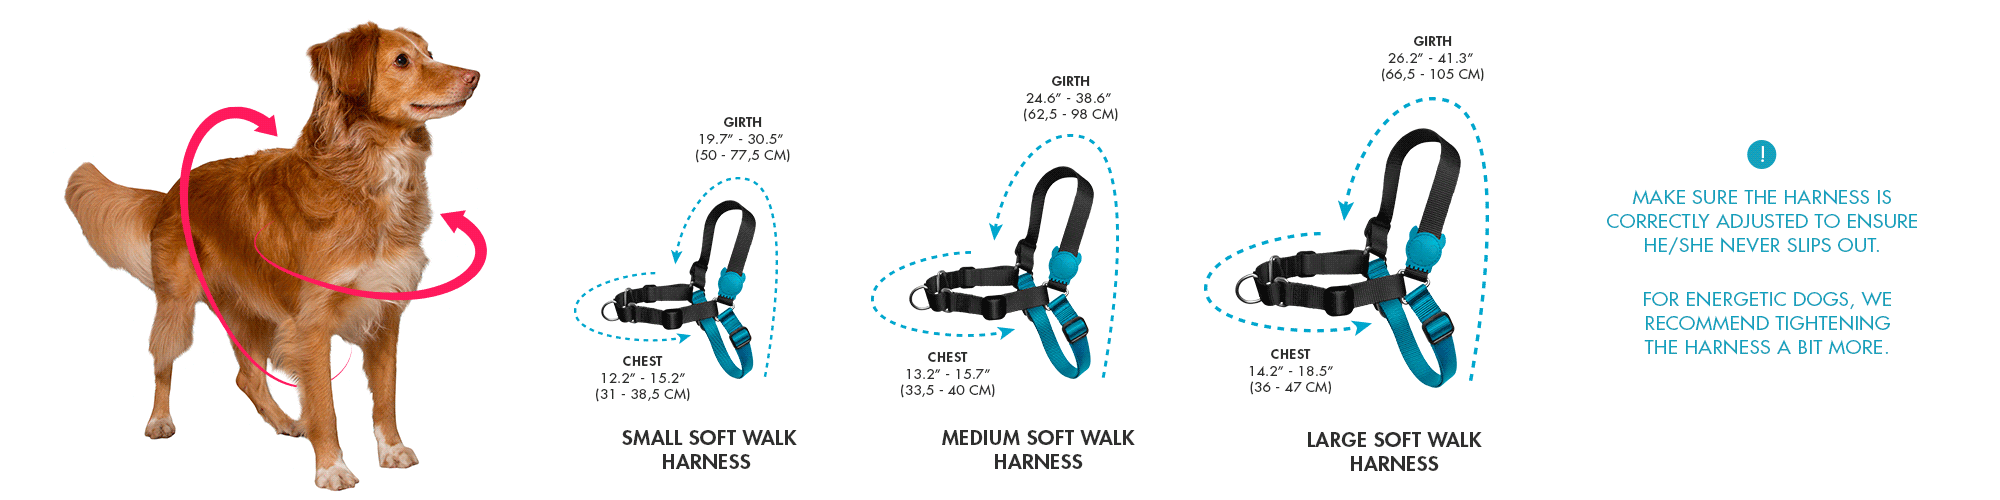 Easy Walk Size Chart